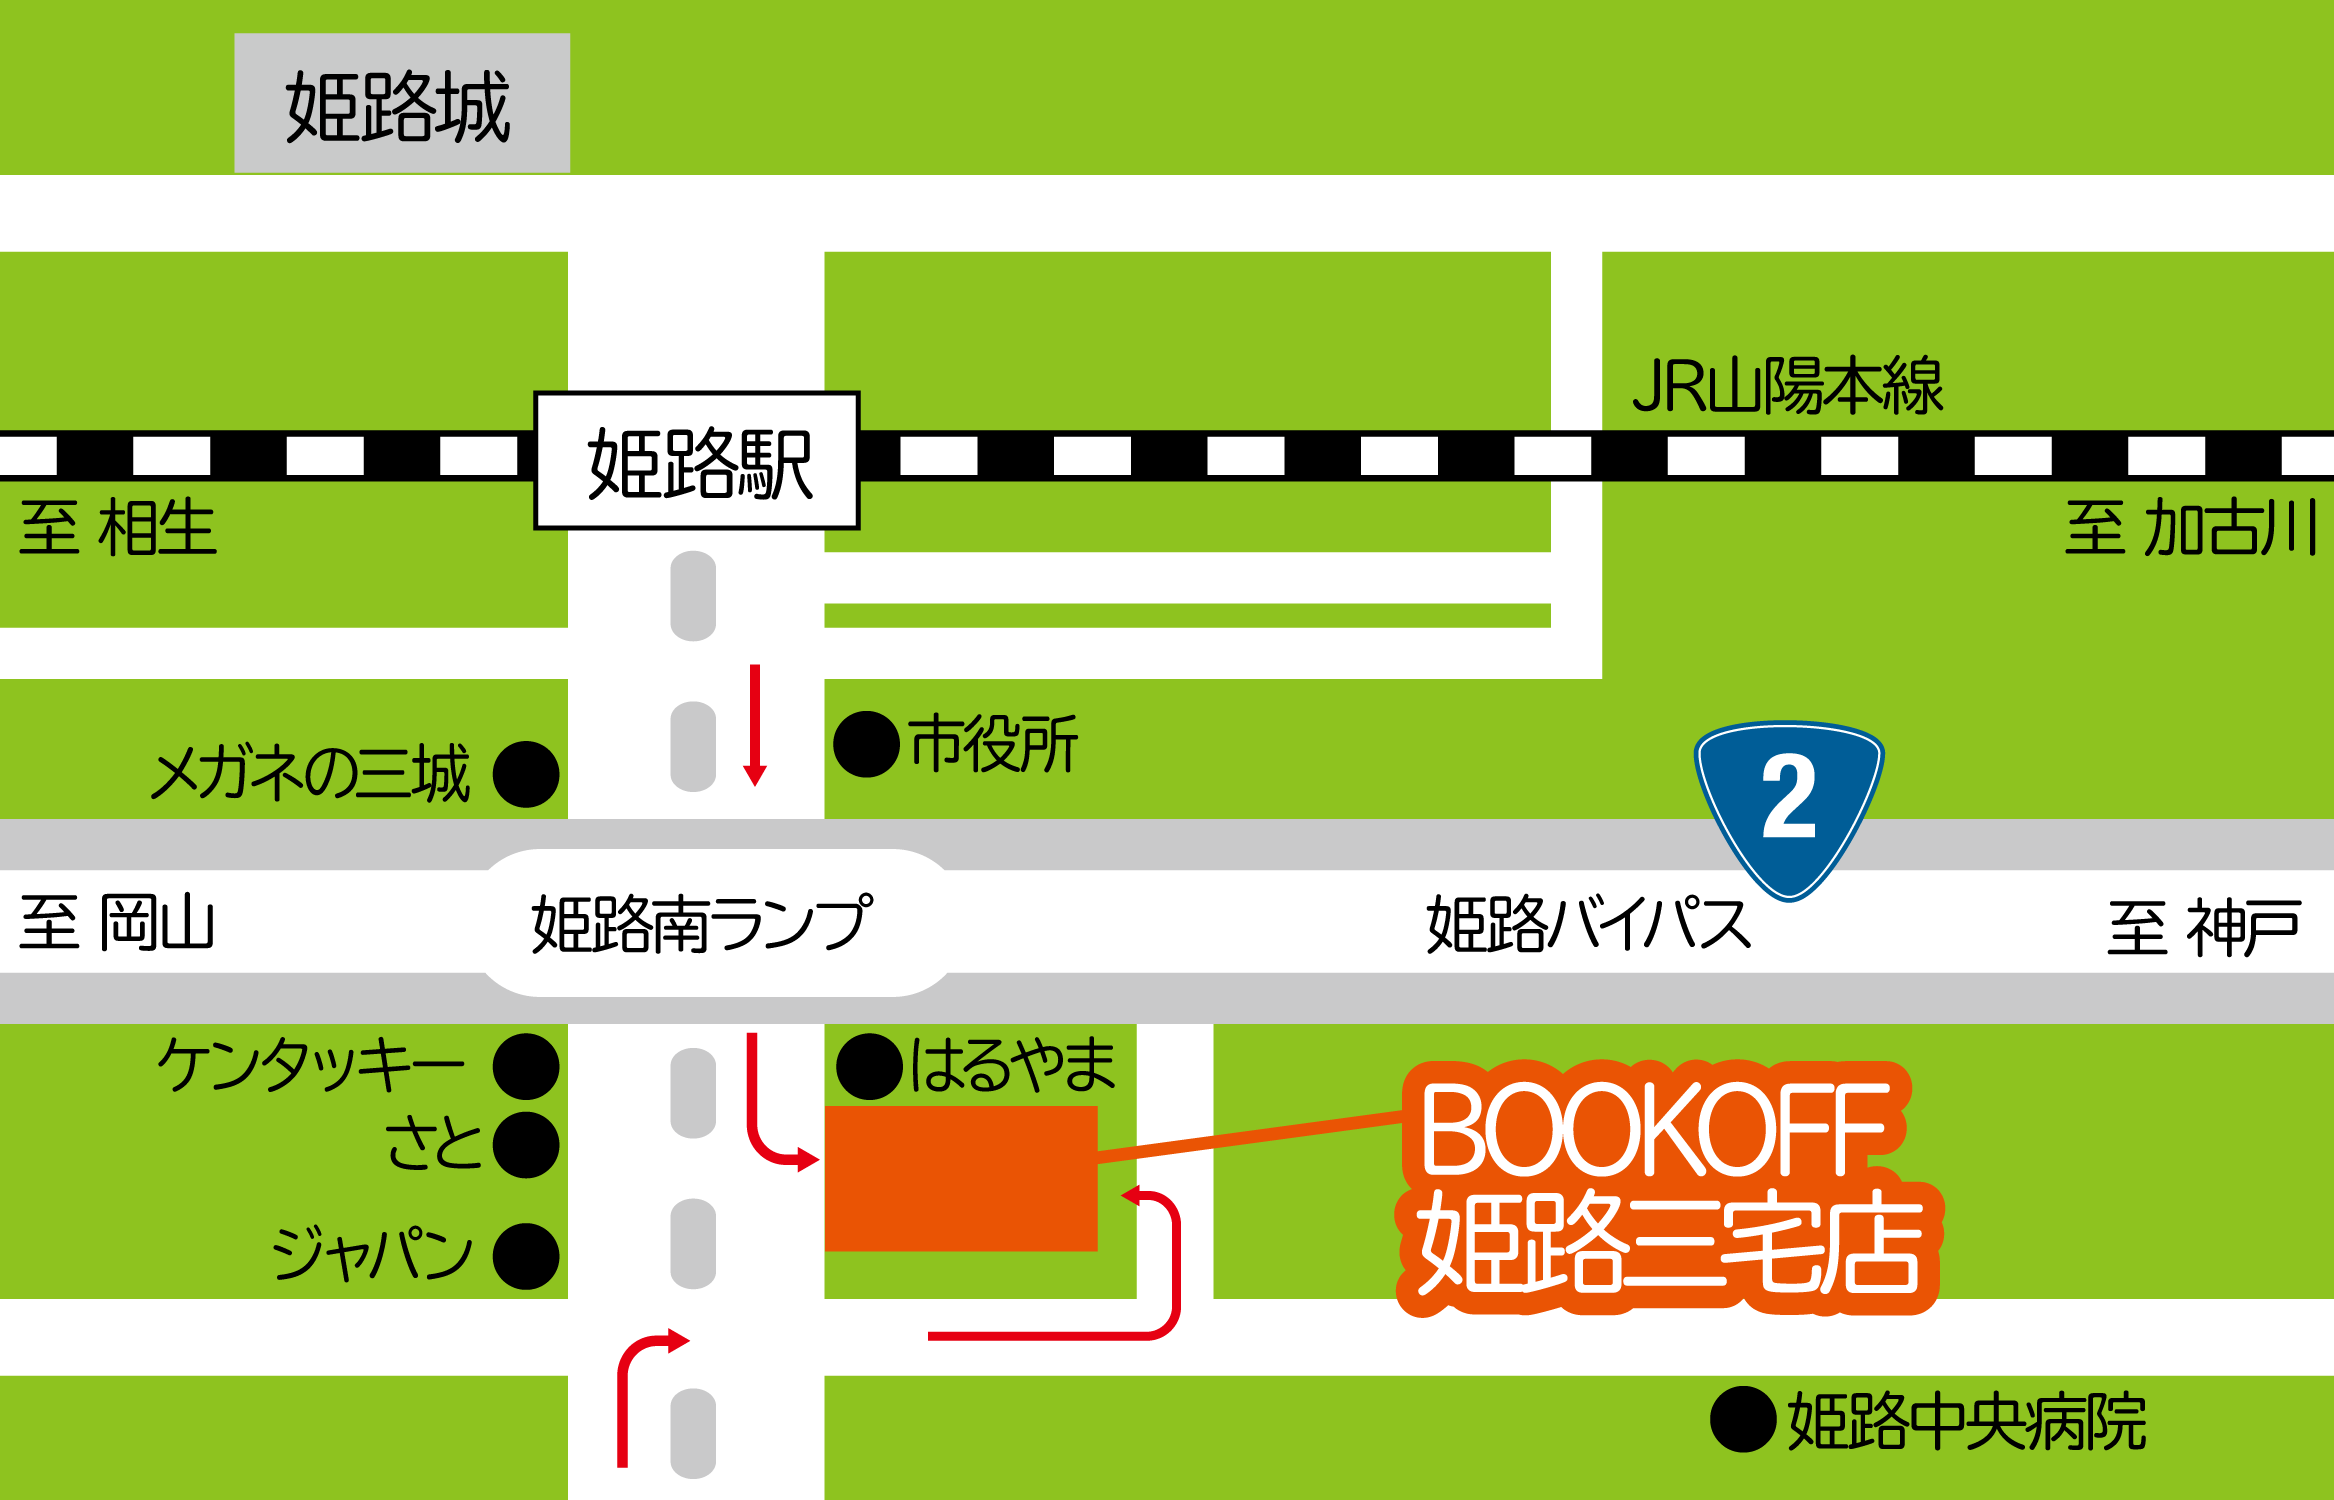 BOOKOFF 姫路三宅店 地図